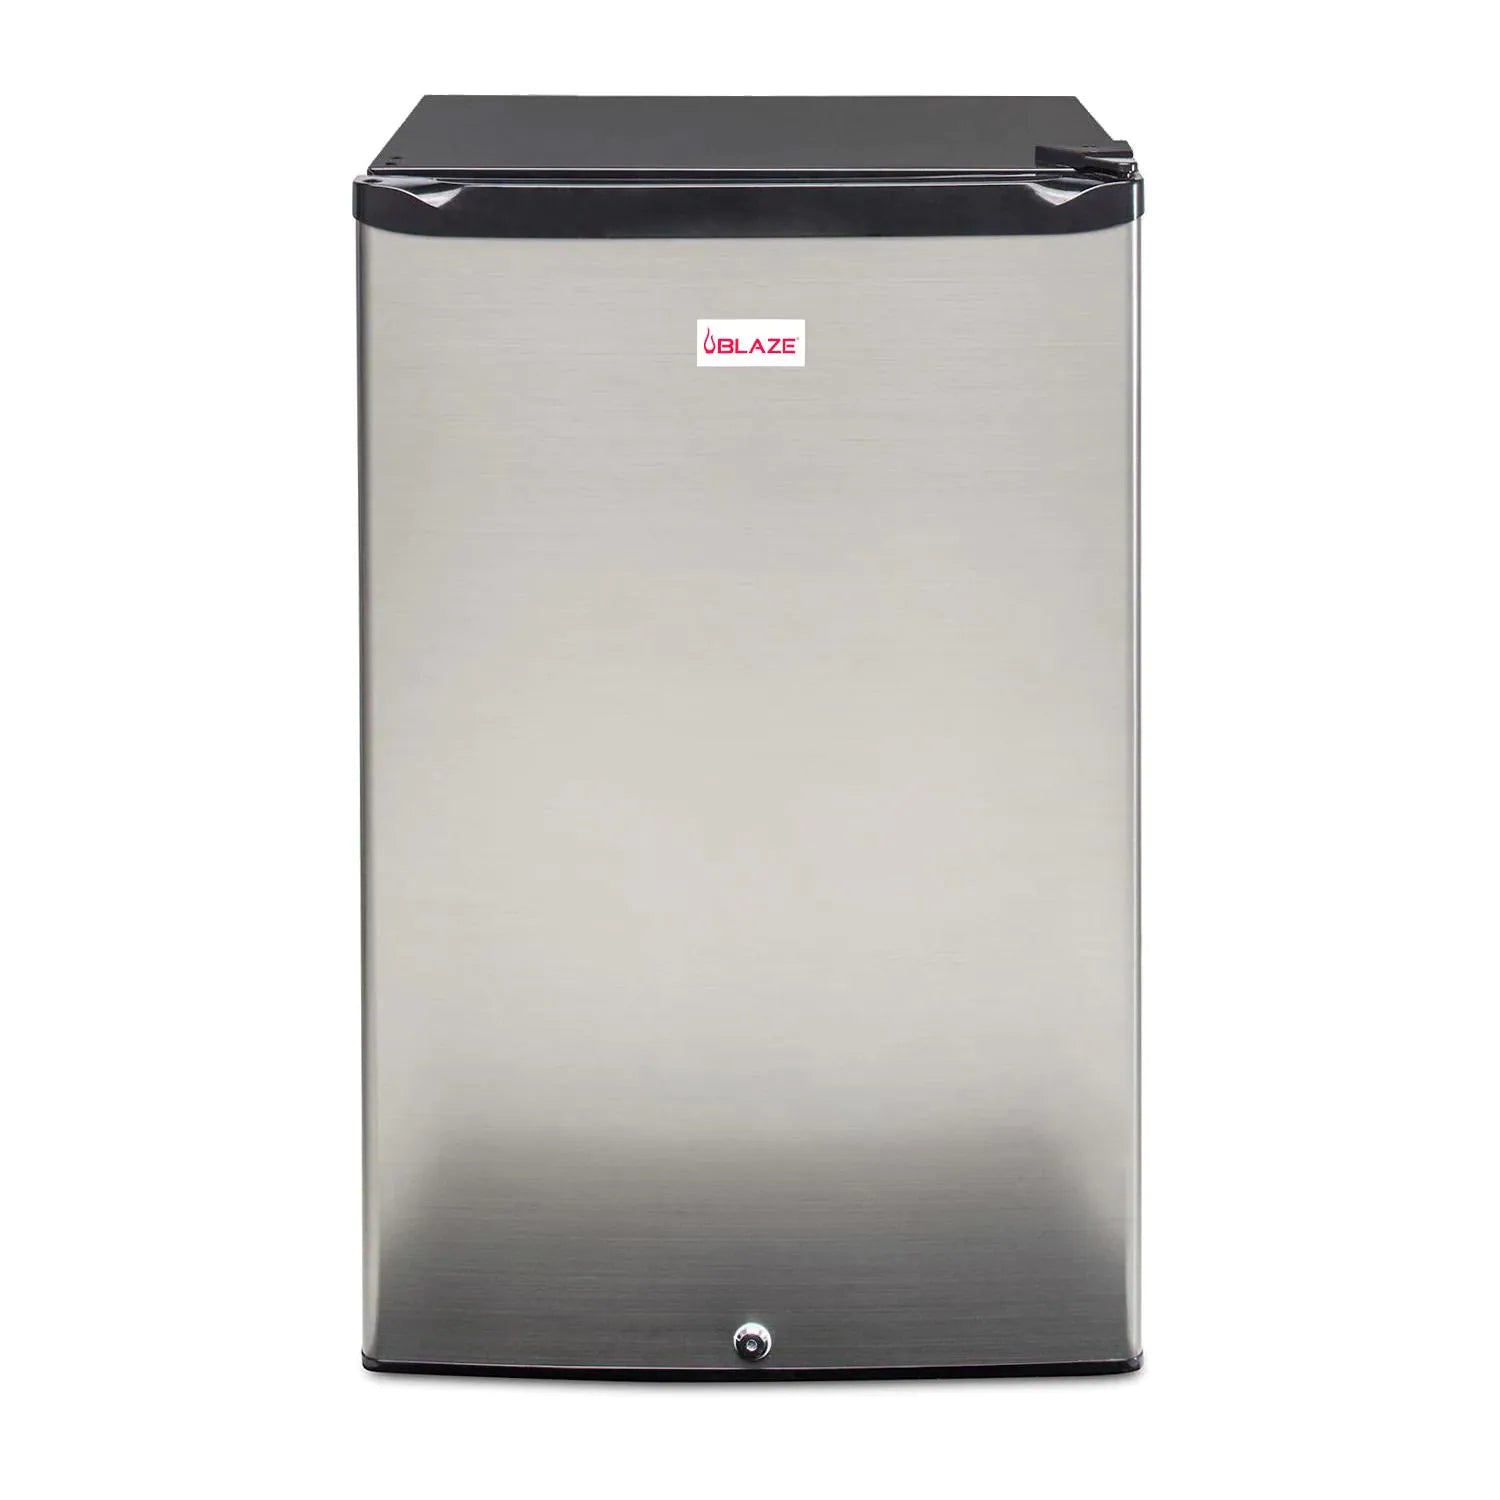 Bull BG-11001 Standard Compact Refrigerator, 4.5 Cubic Feet